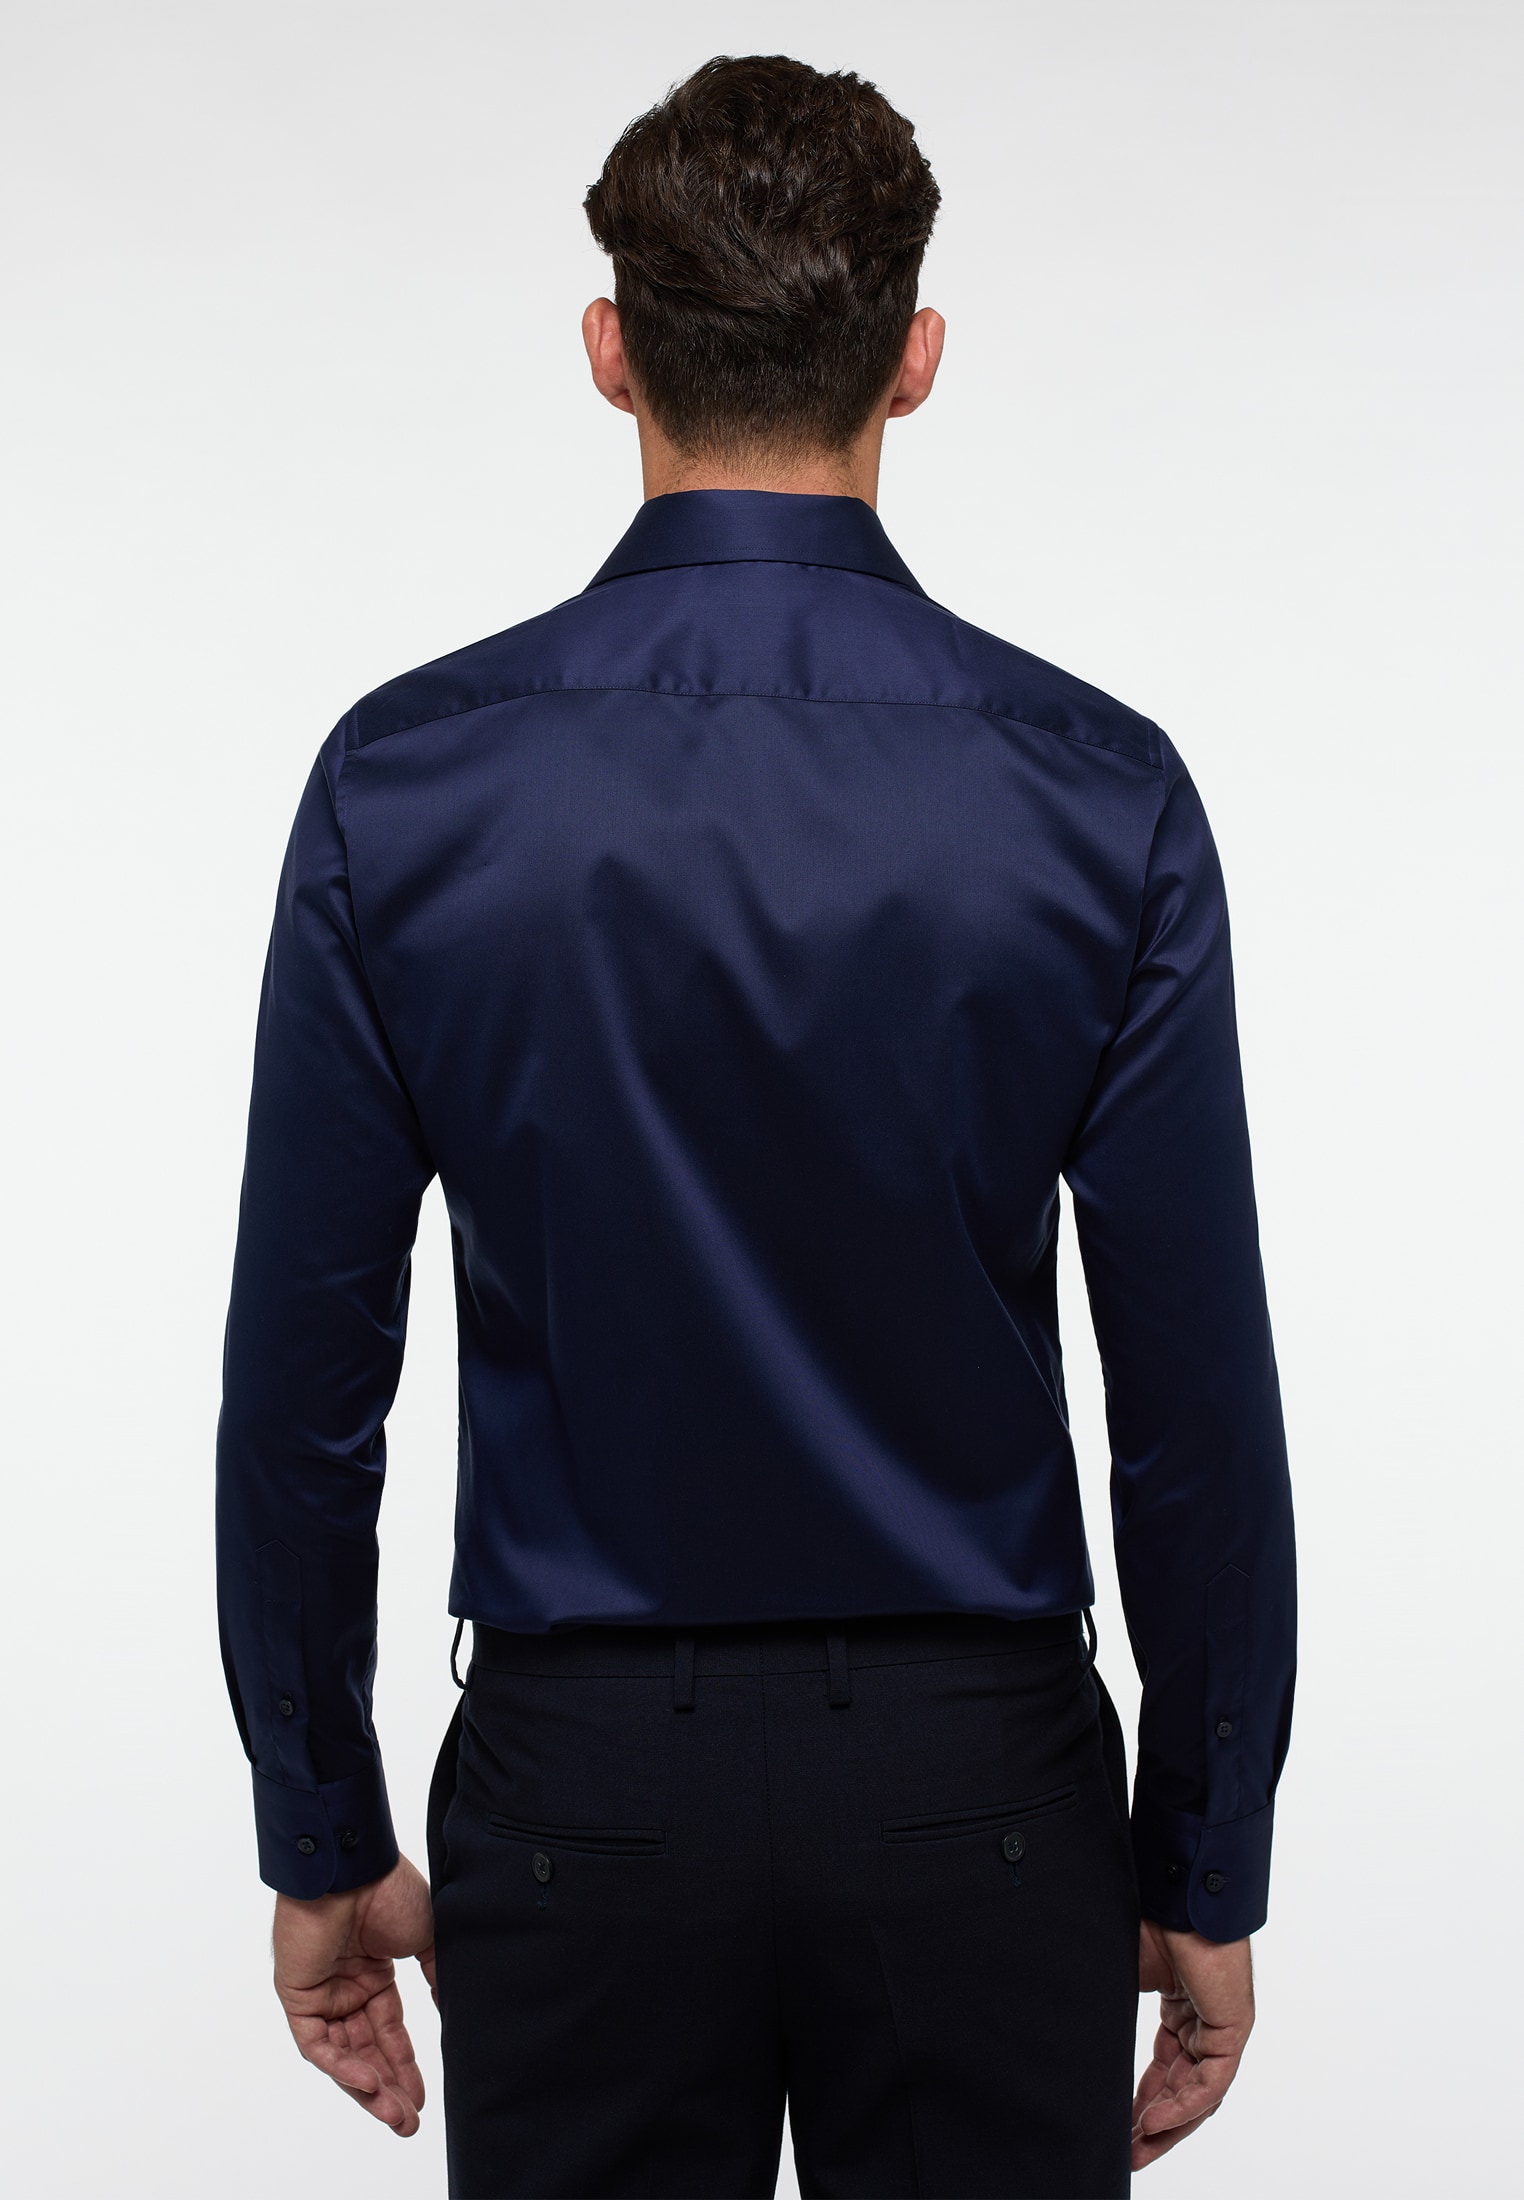 SLIM FIT Luxury Shirt | dunkelblau | | unifarben 1SH04299-01-81-44-1/1 dunkelblau in | Langarm 44